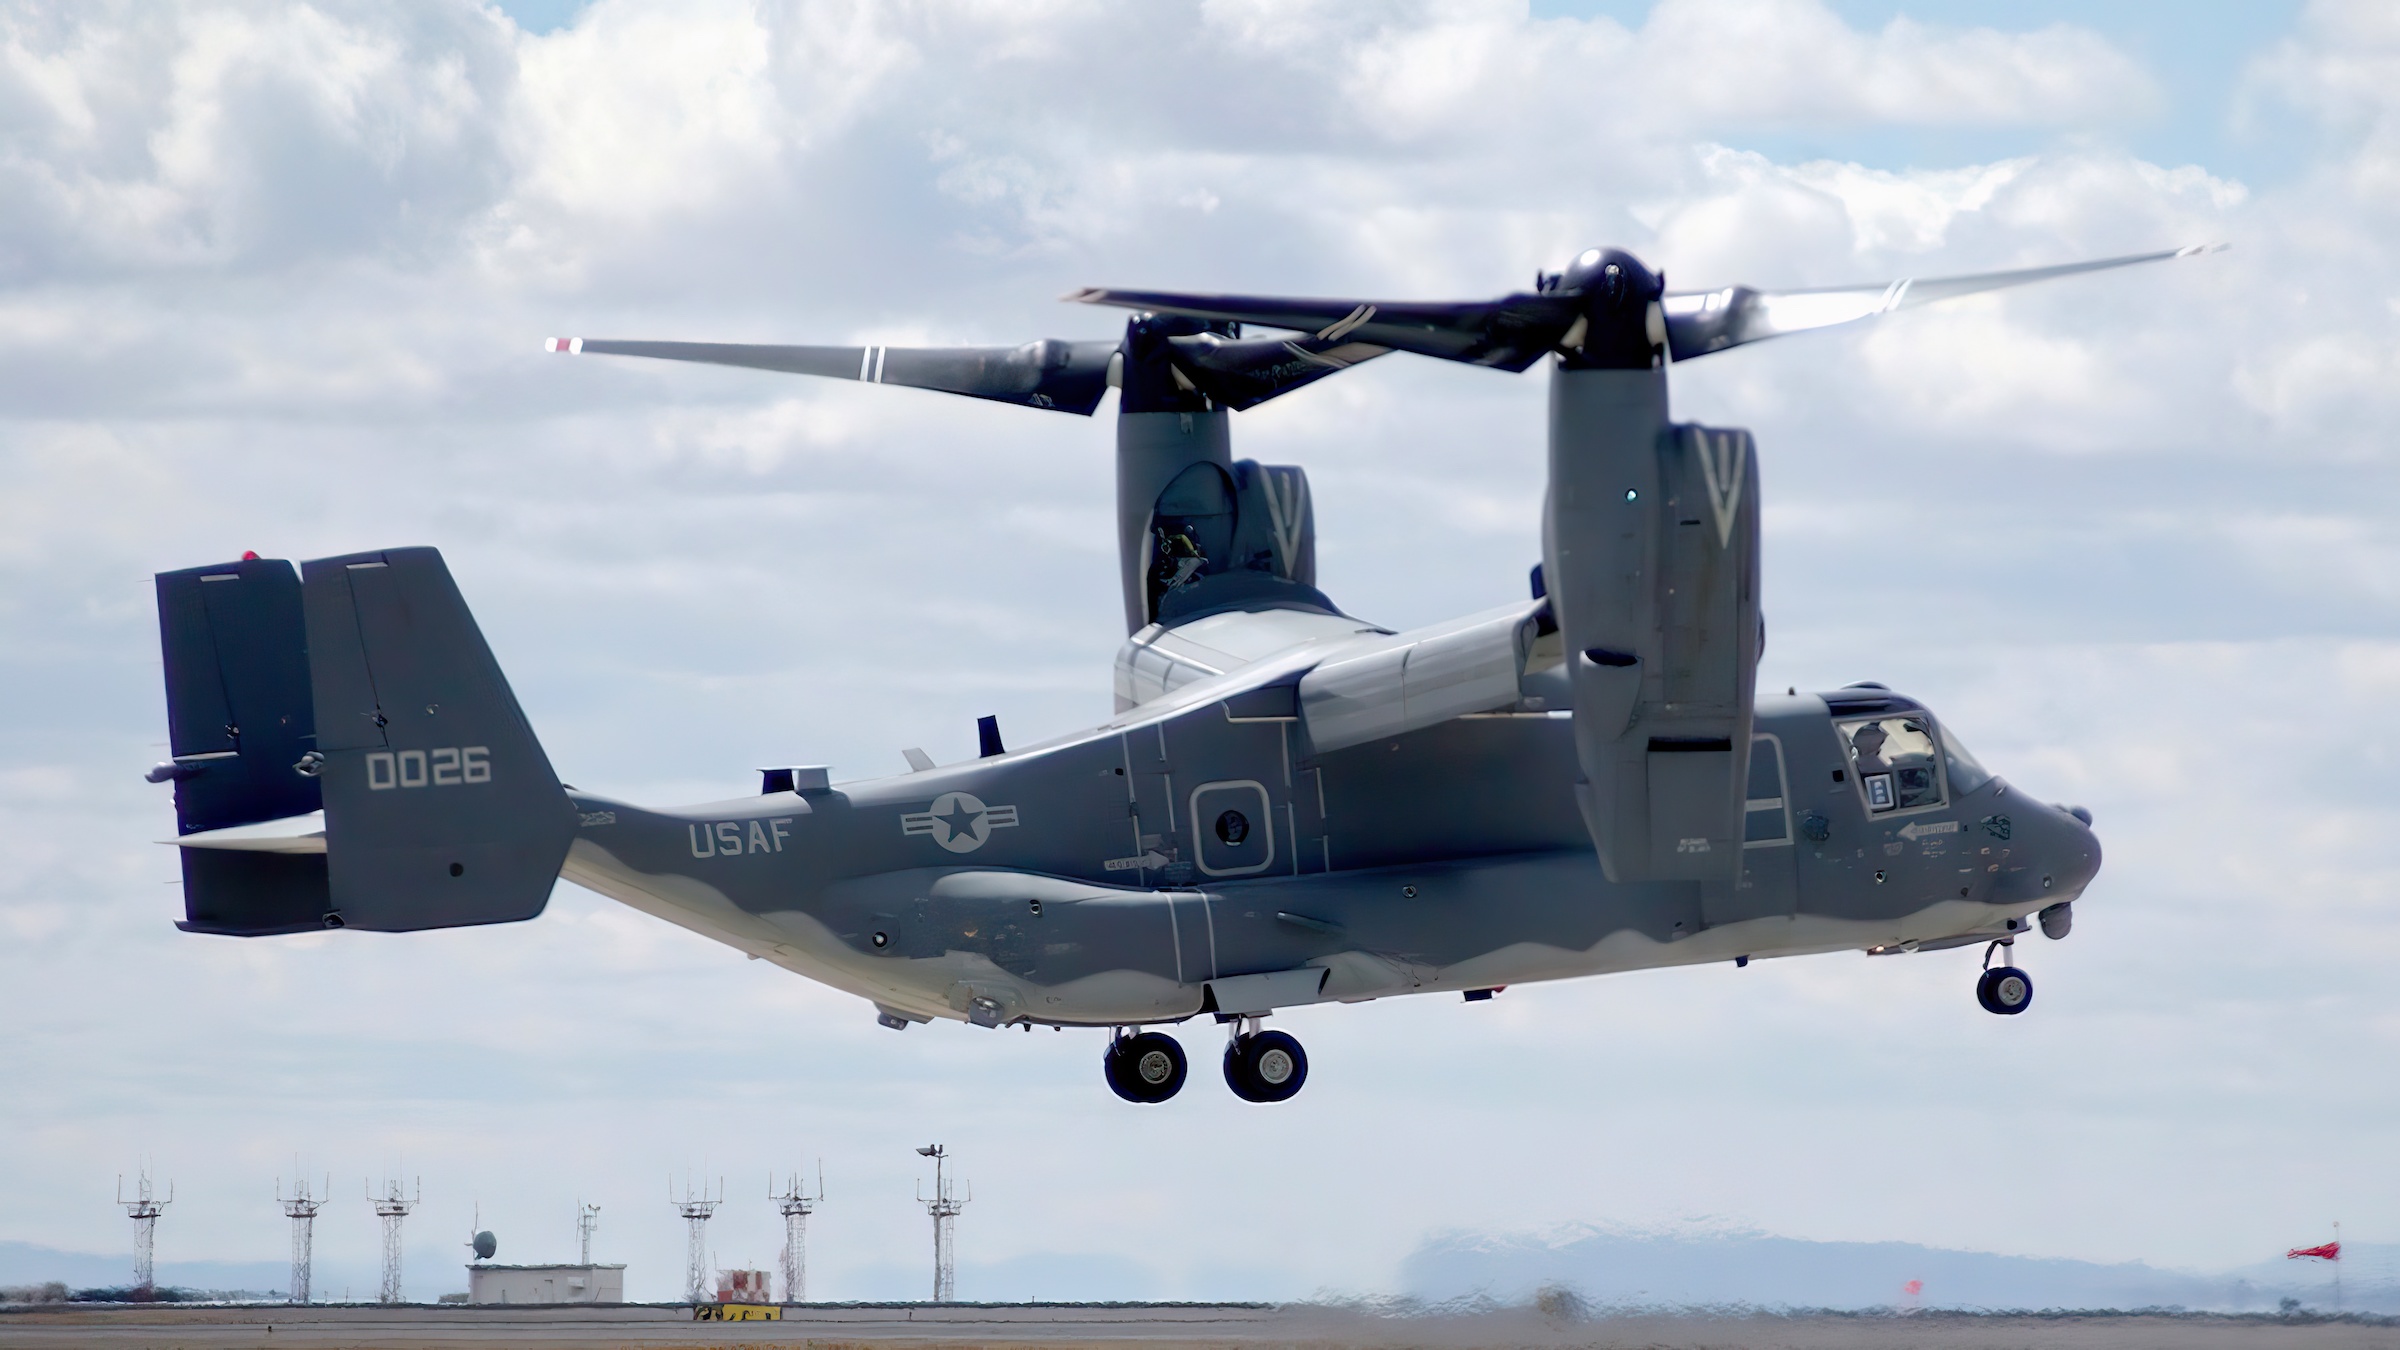 CV-22 Osprey tilt-rotor aircraft